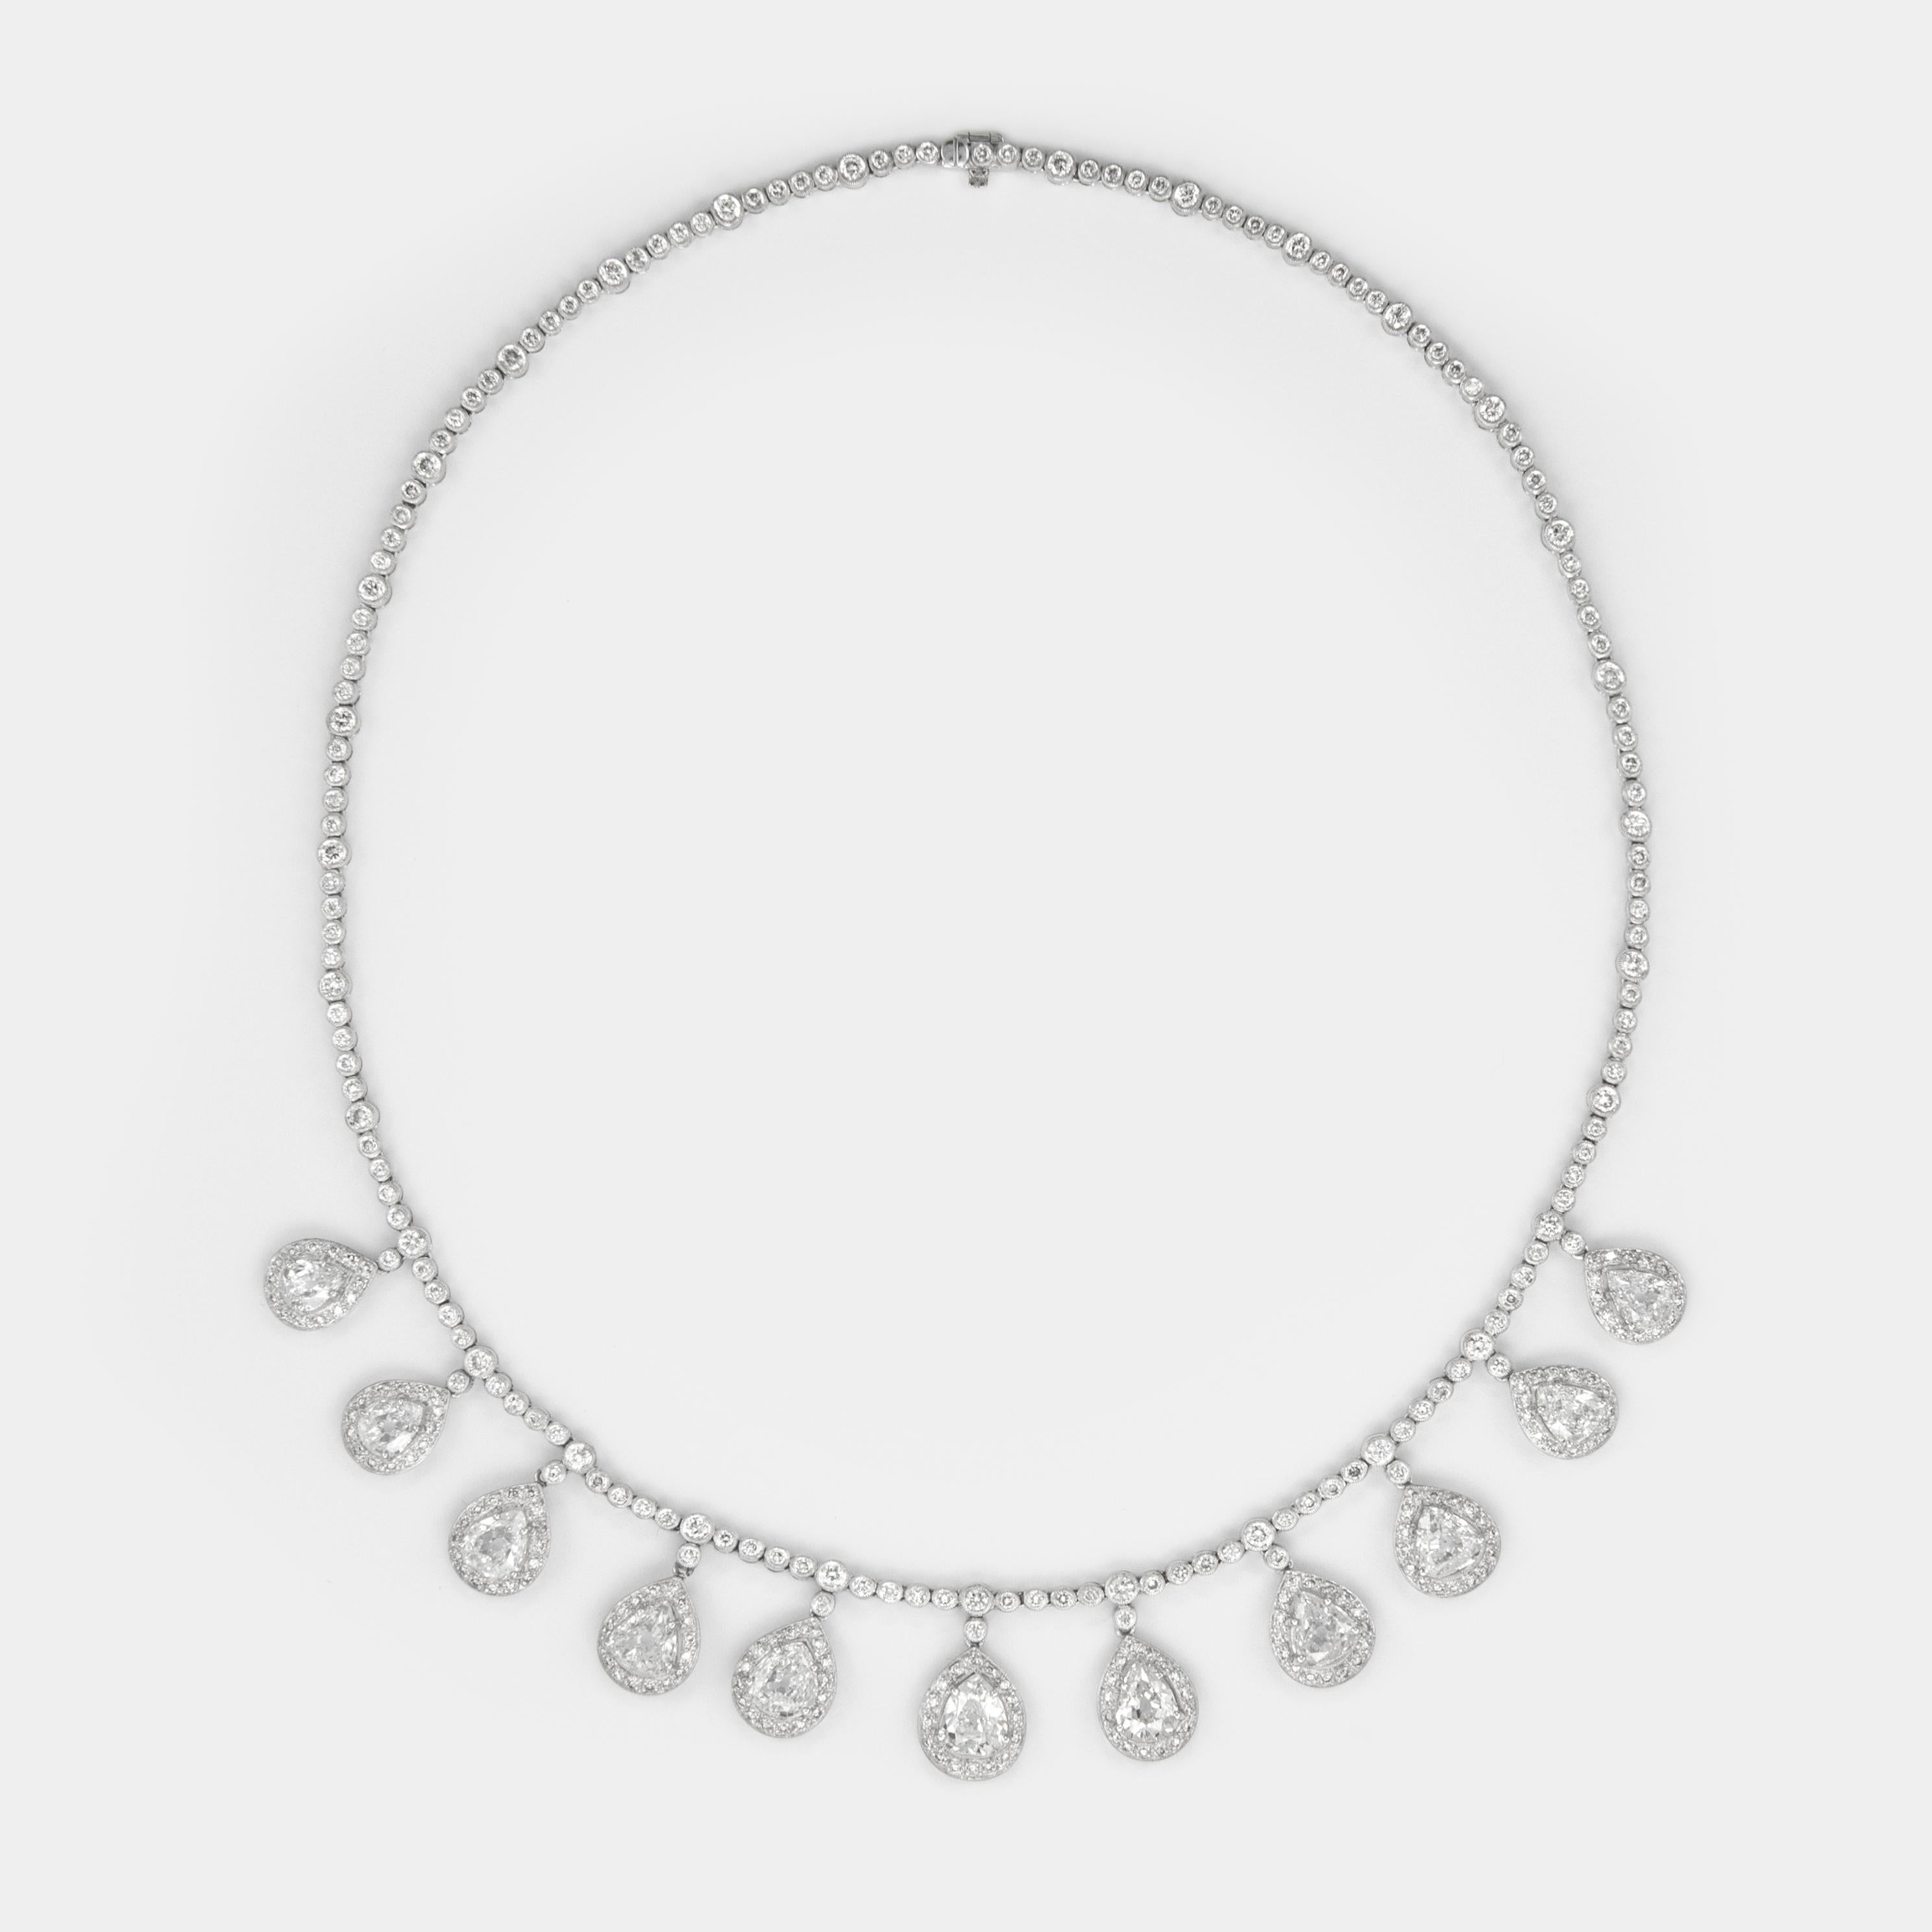 Edwardian 14.11 Carat Old Pear Cut Diamond Dangling Necklace 18 Karat White Gold For Sale